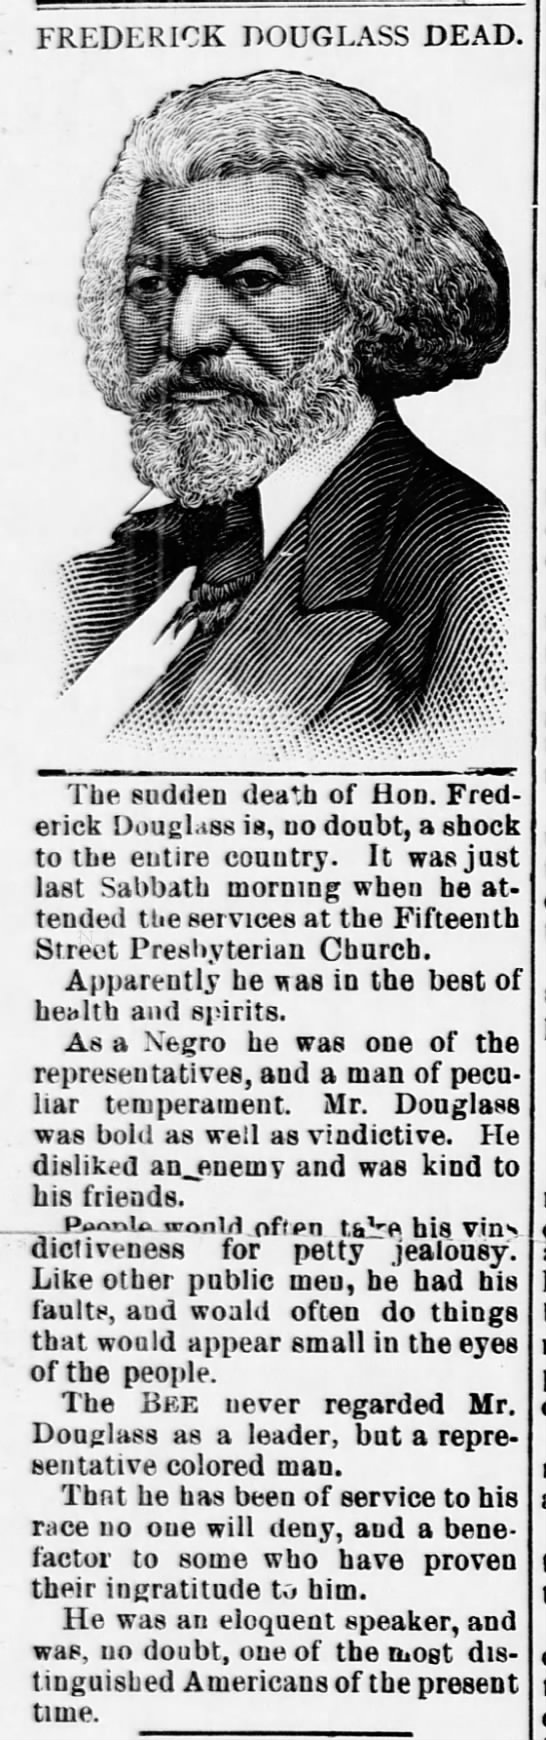 1895 newspaper obituary with criticisms of Frederick Douglass - 